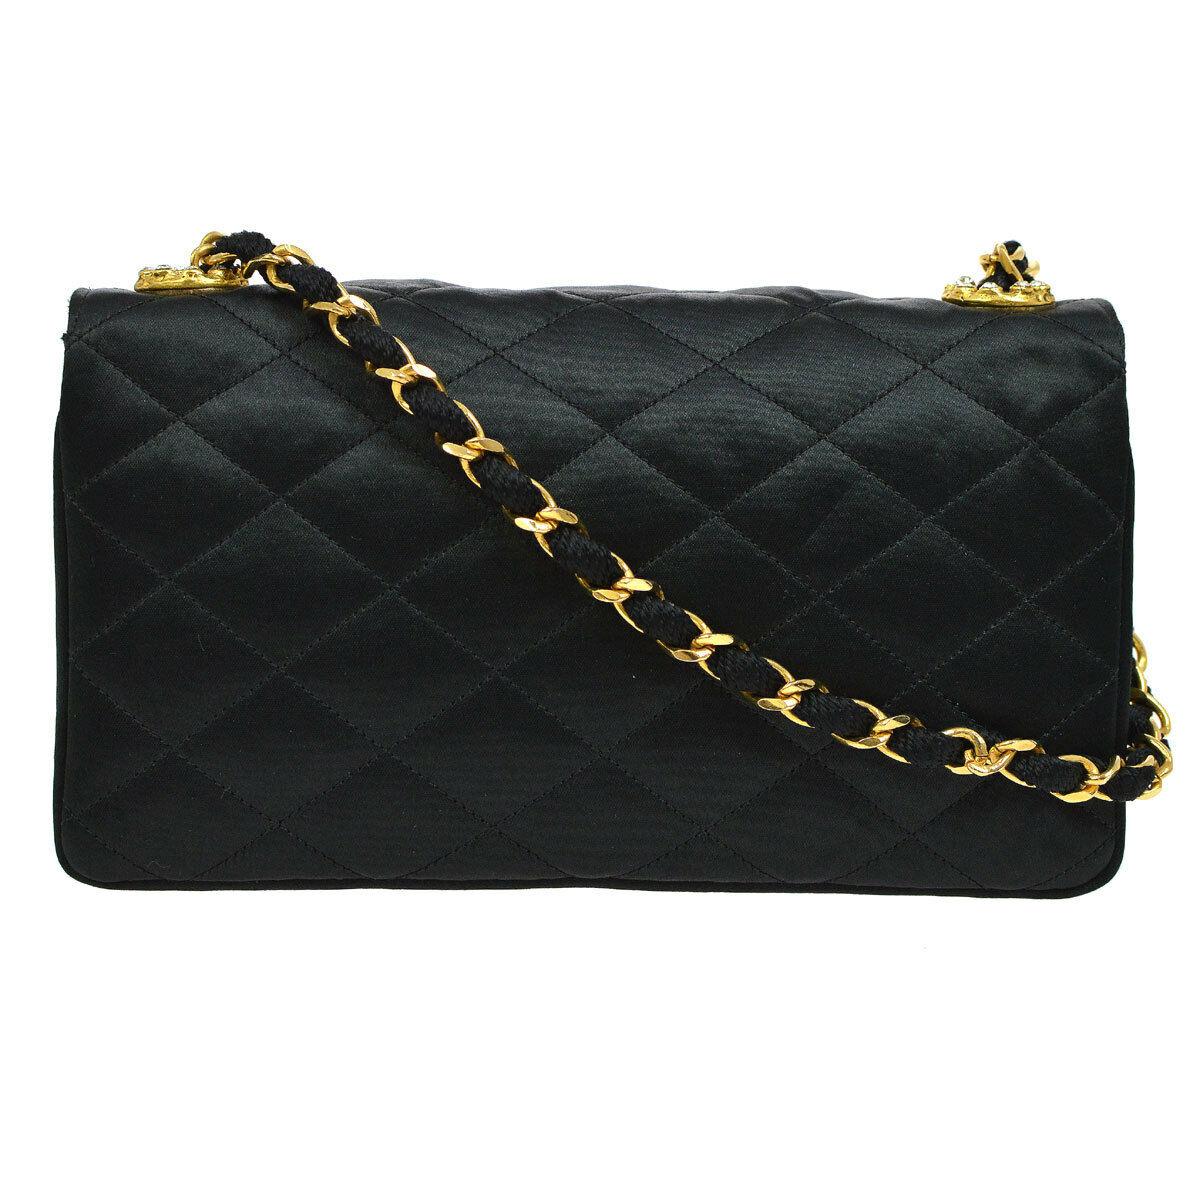 Women's Chanel Black Satin Gold Rhinestone Evening Party Clutch Shoulder Flap Bag in Box